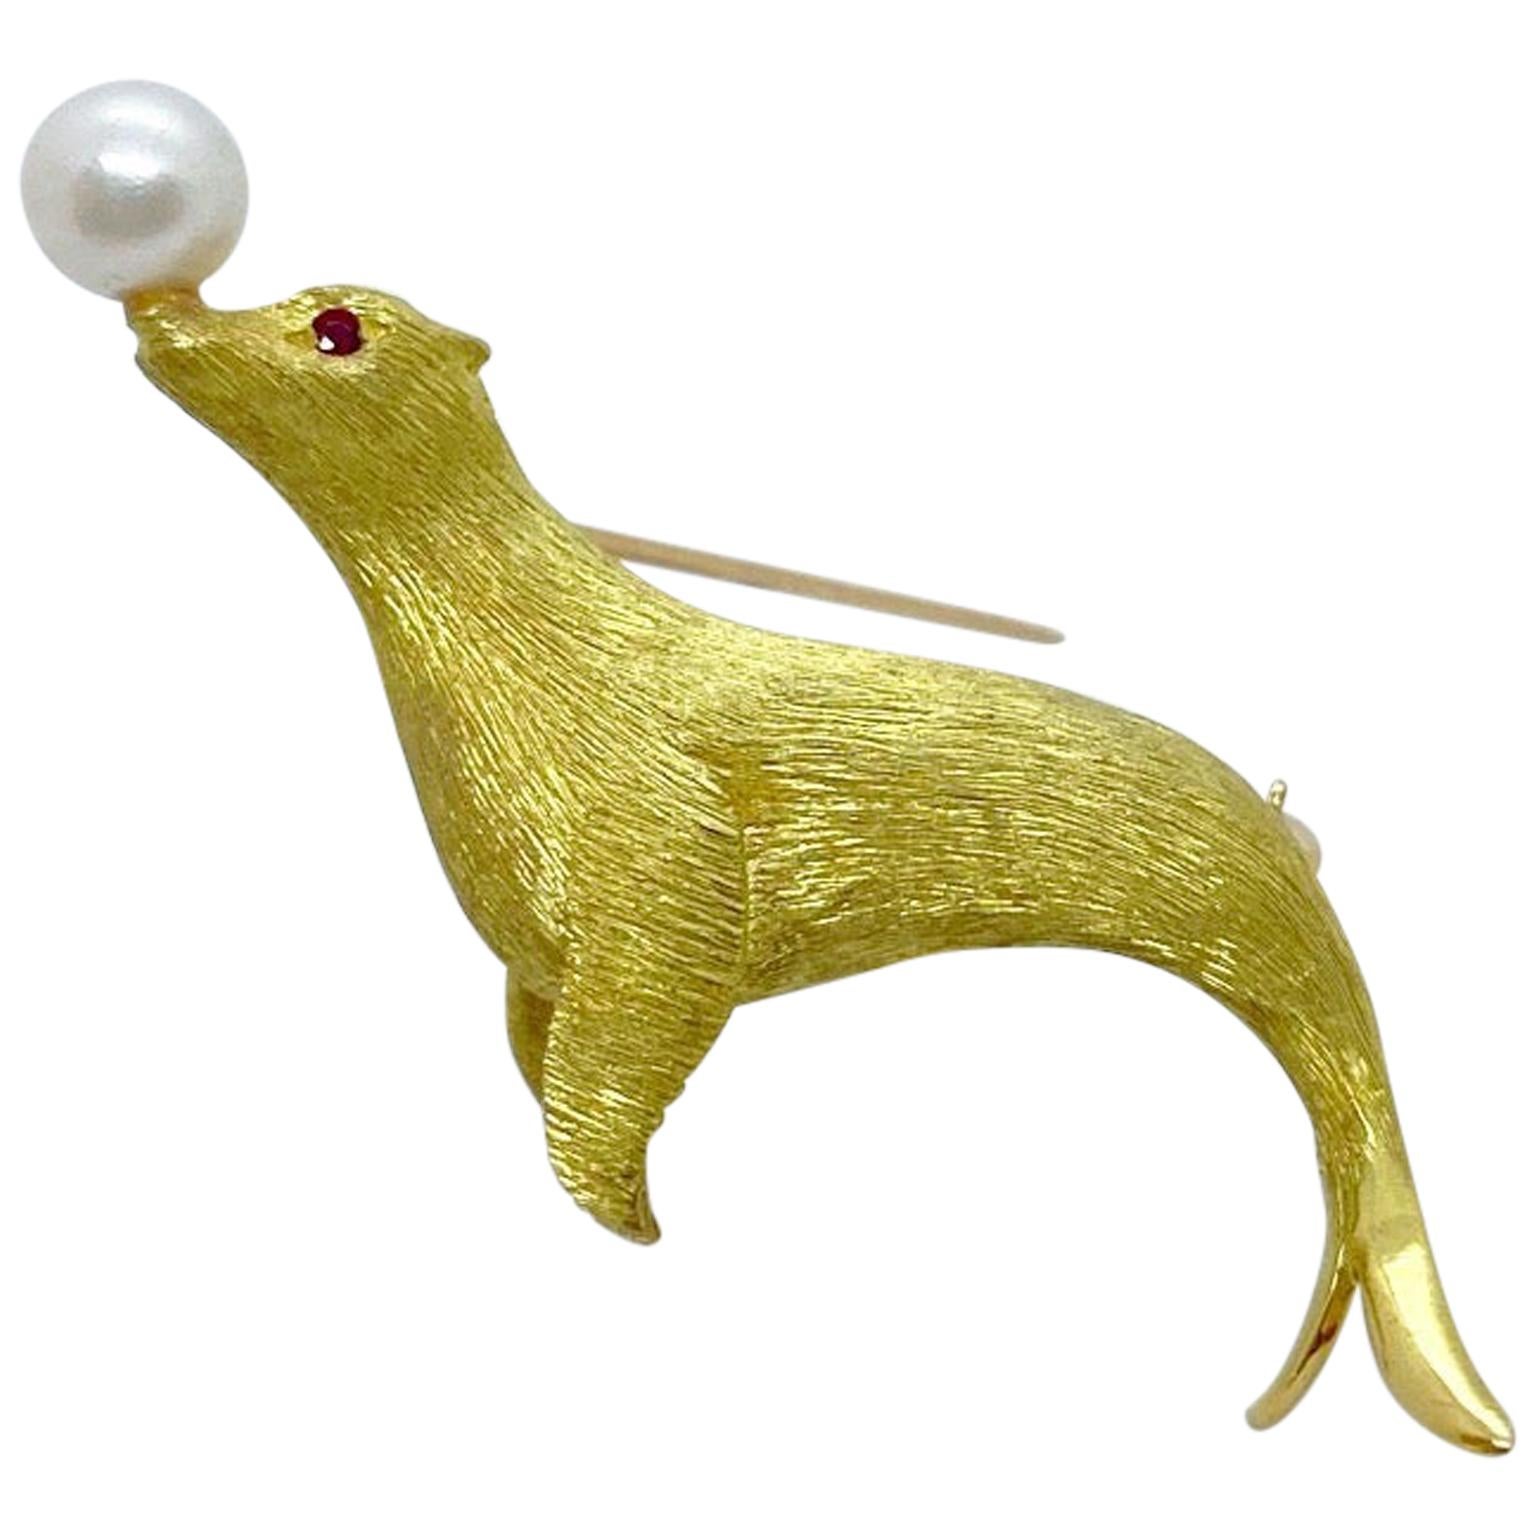 George Lederman 18 Karat Yellow Gold Seal Balancing a Pearl on His Nose Brooch